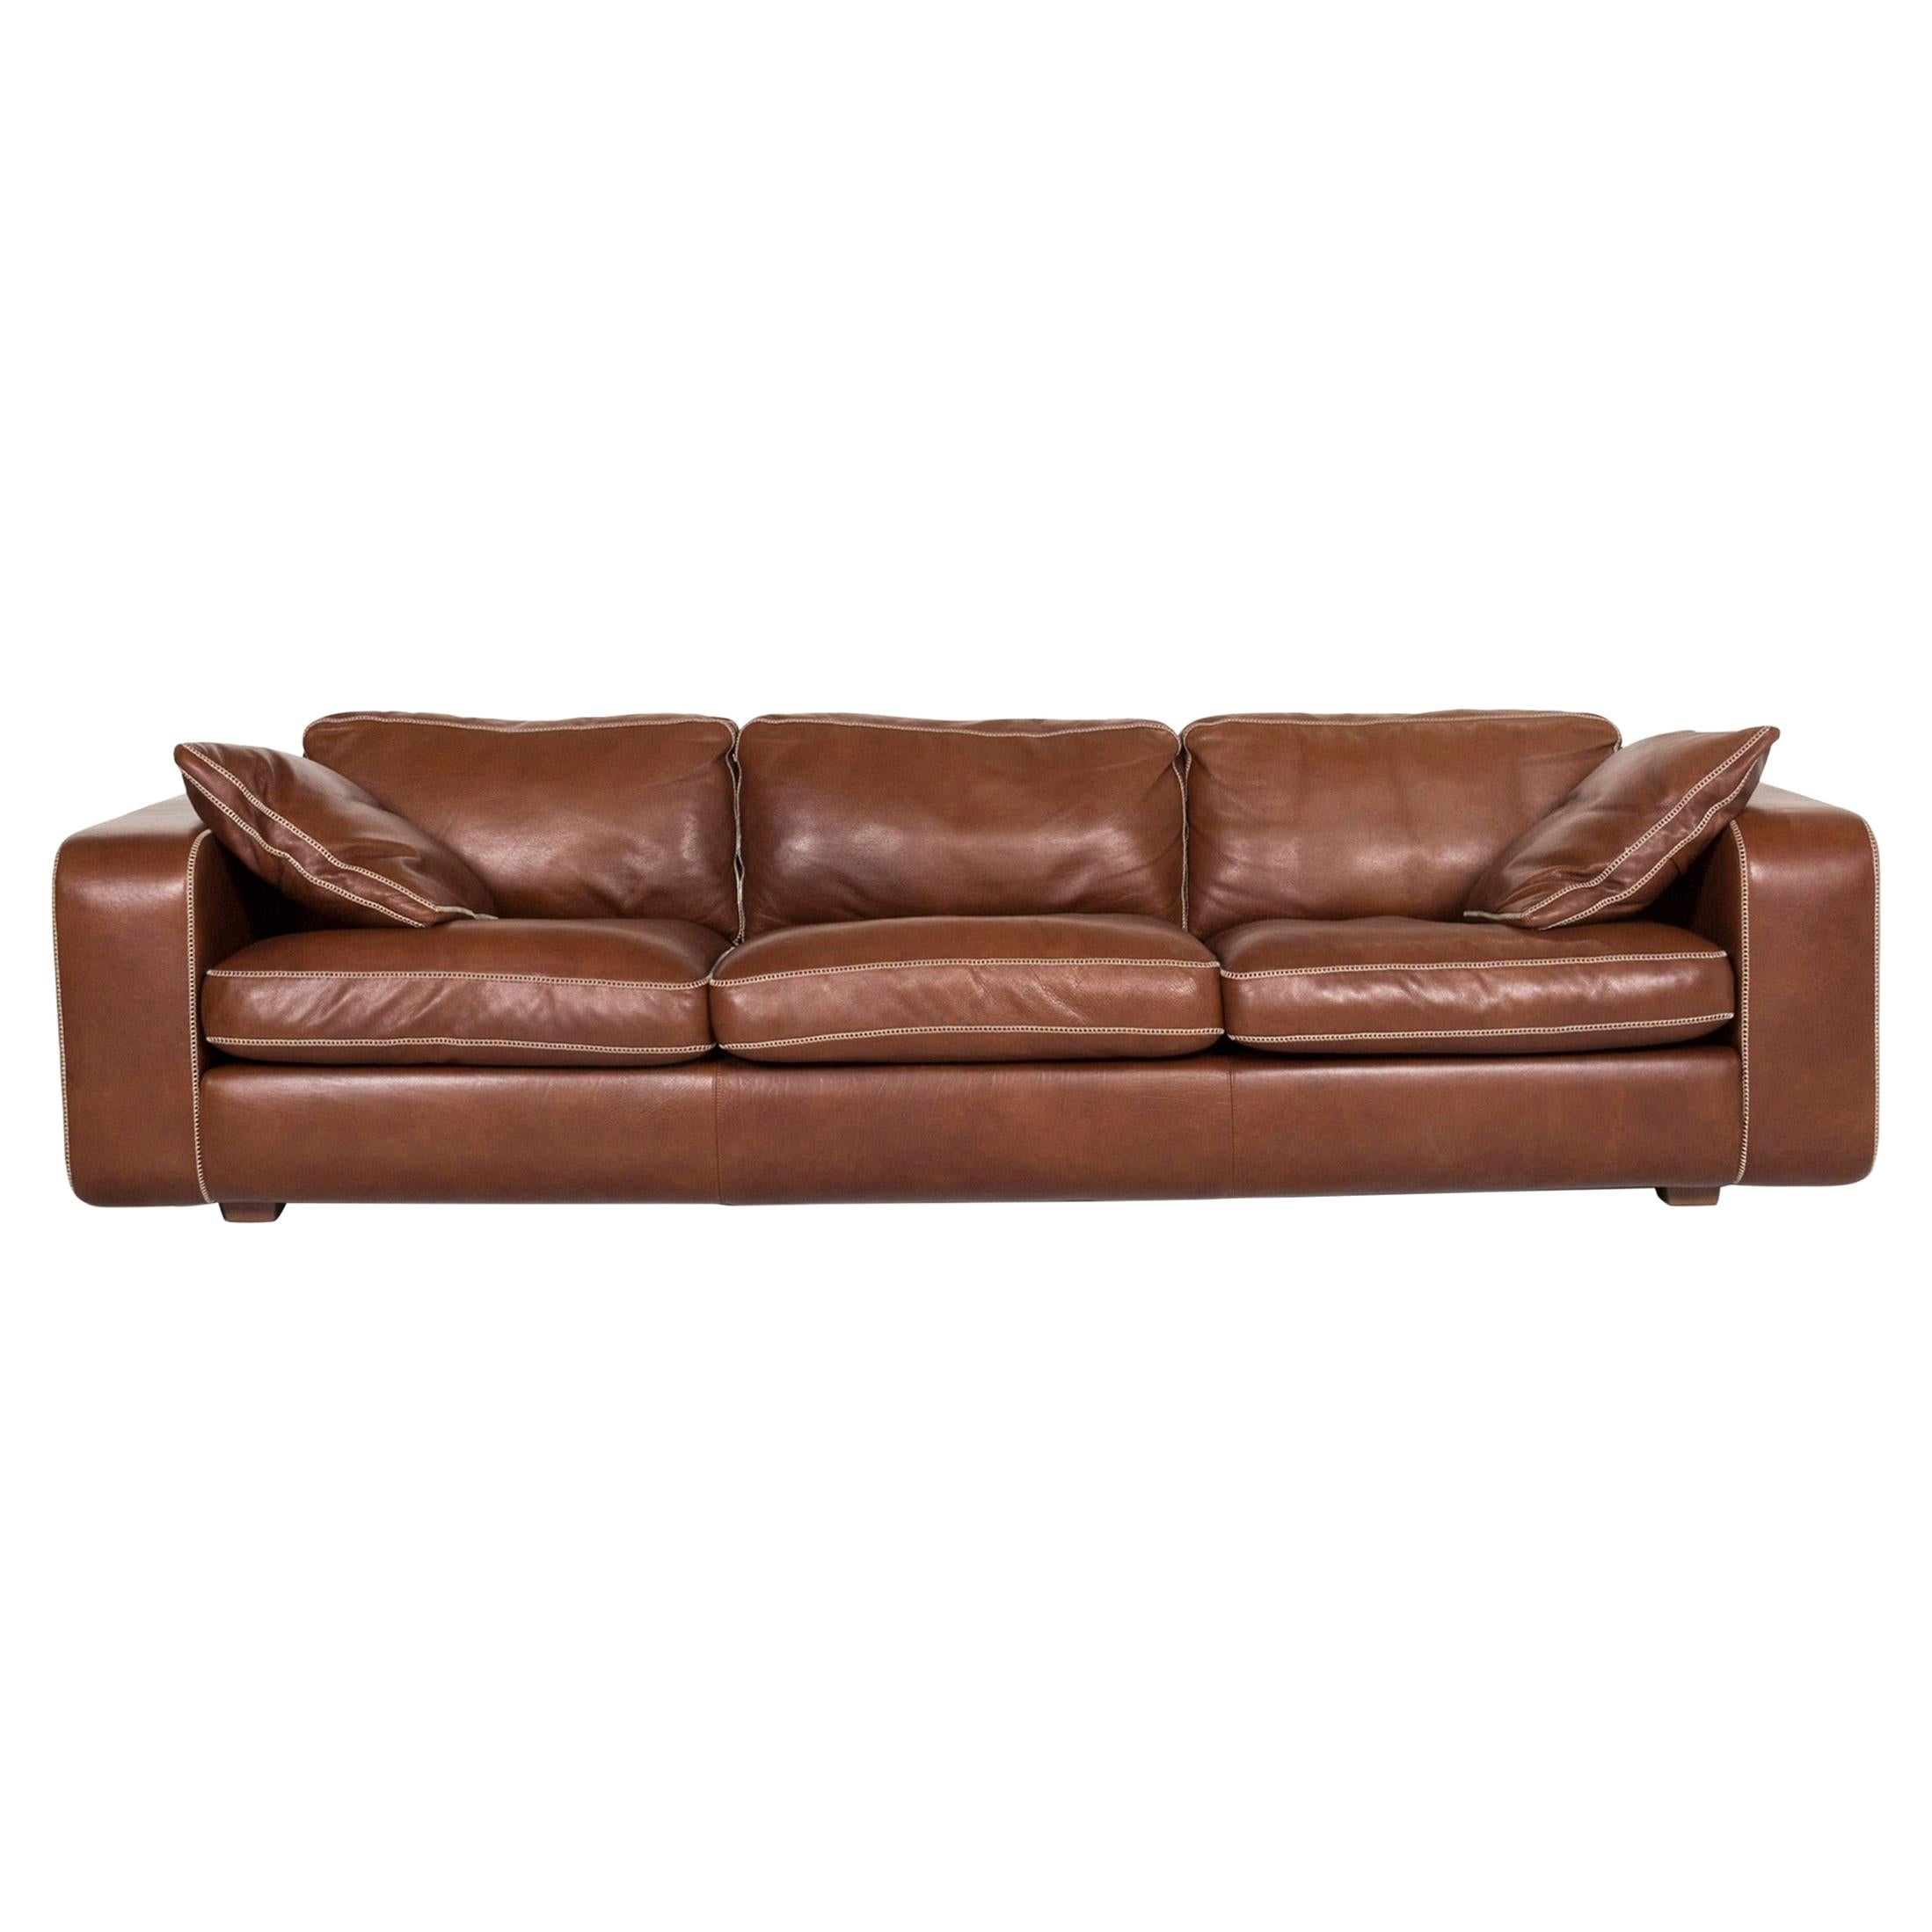 Machalke Valentino Leather Sofa Brown Three-Seat Couch